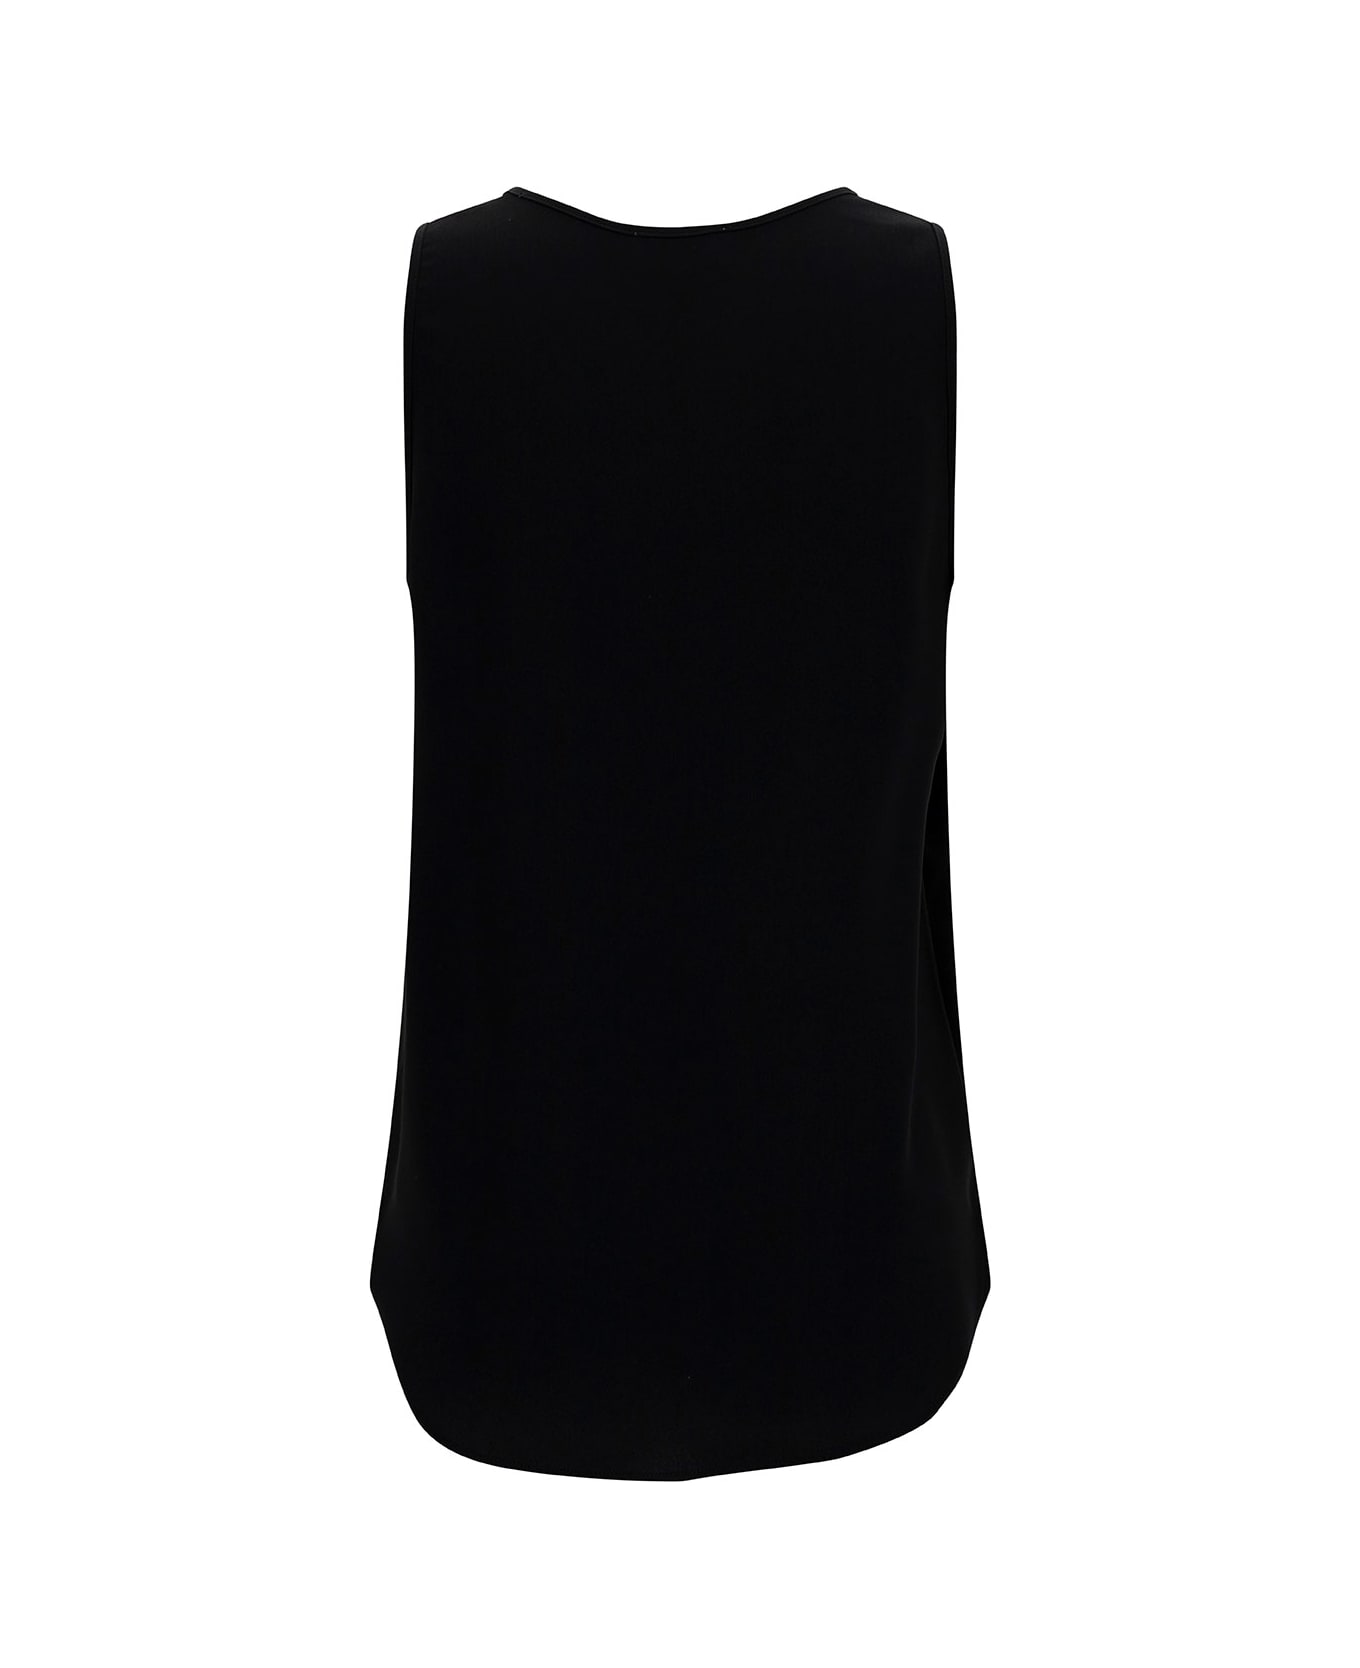 Parosh Black Tank Top With Plunging U Neckline In Polyamide Woman - Black